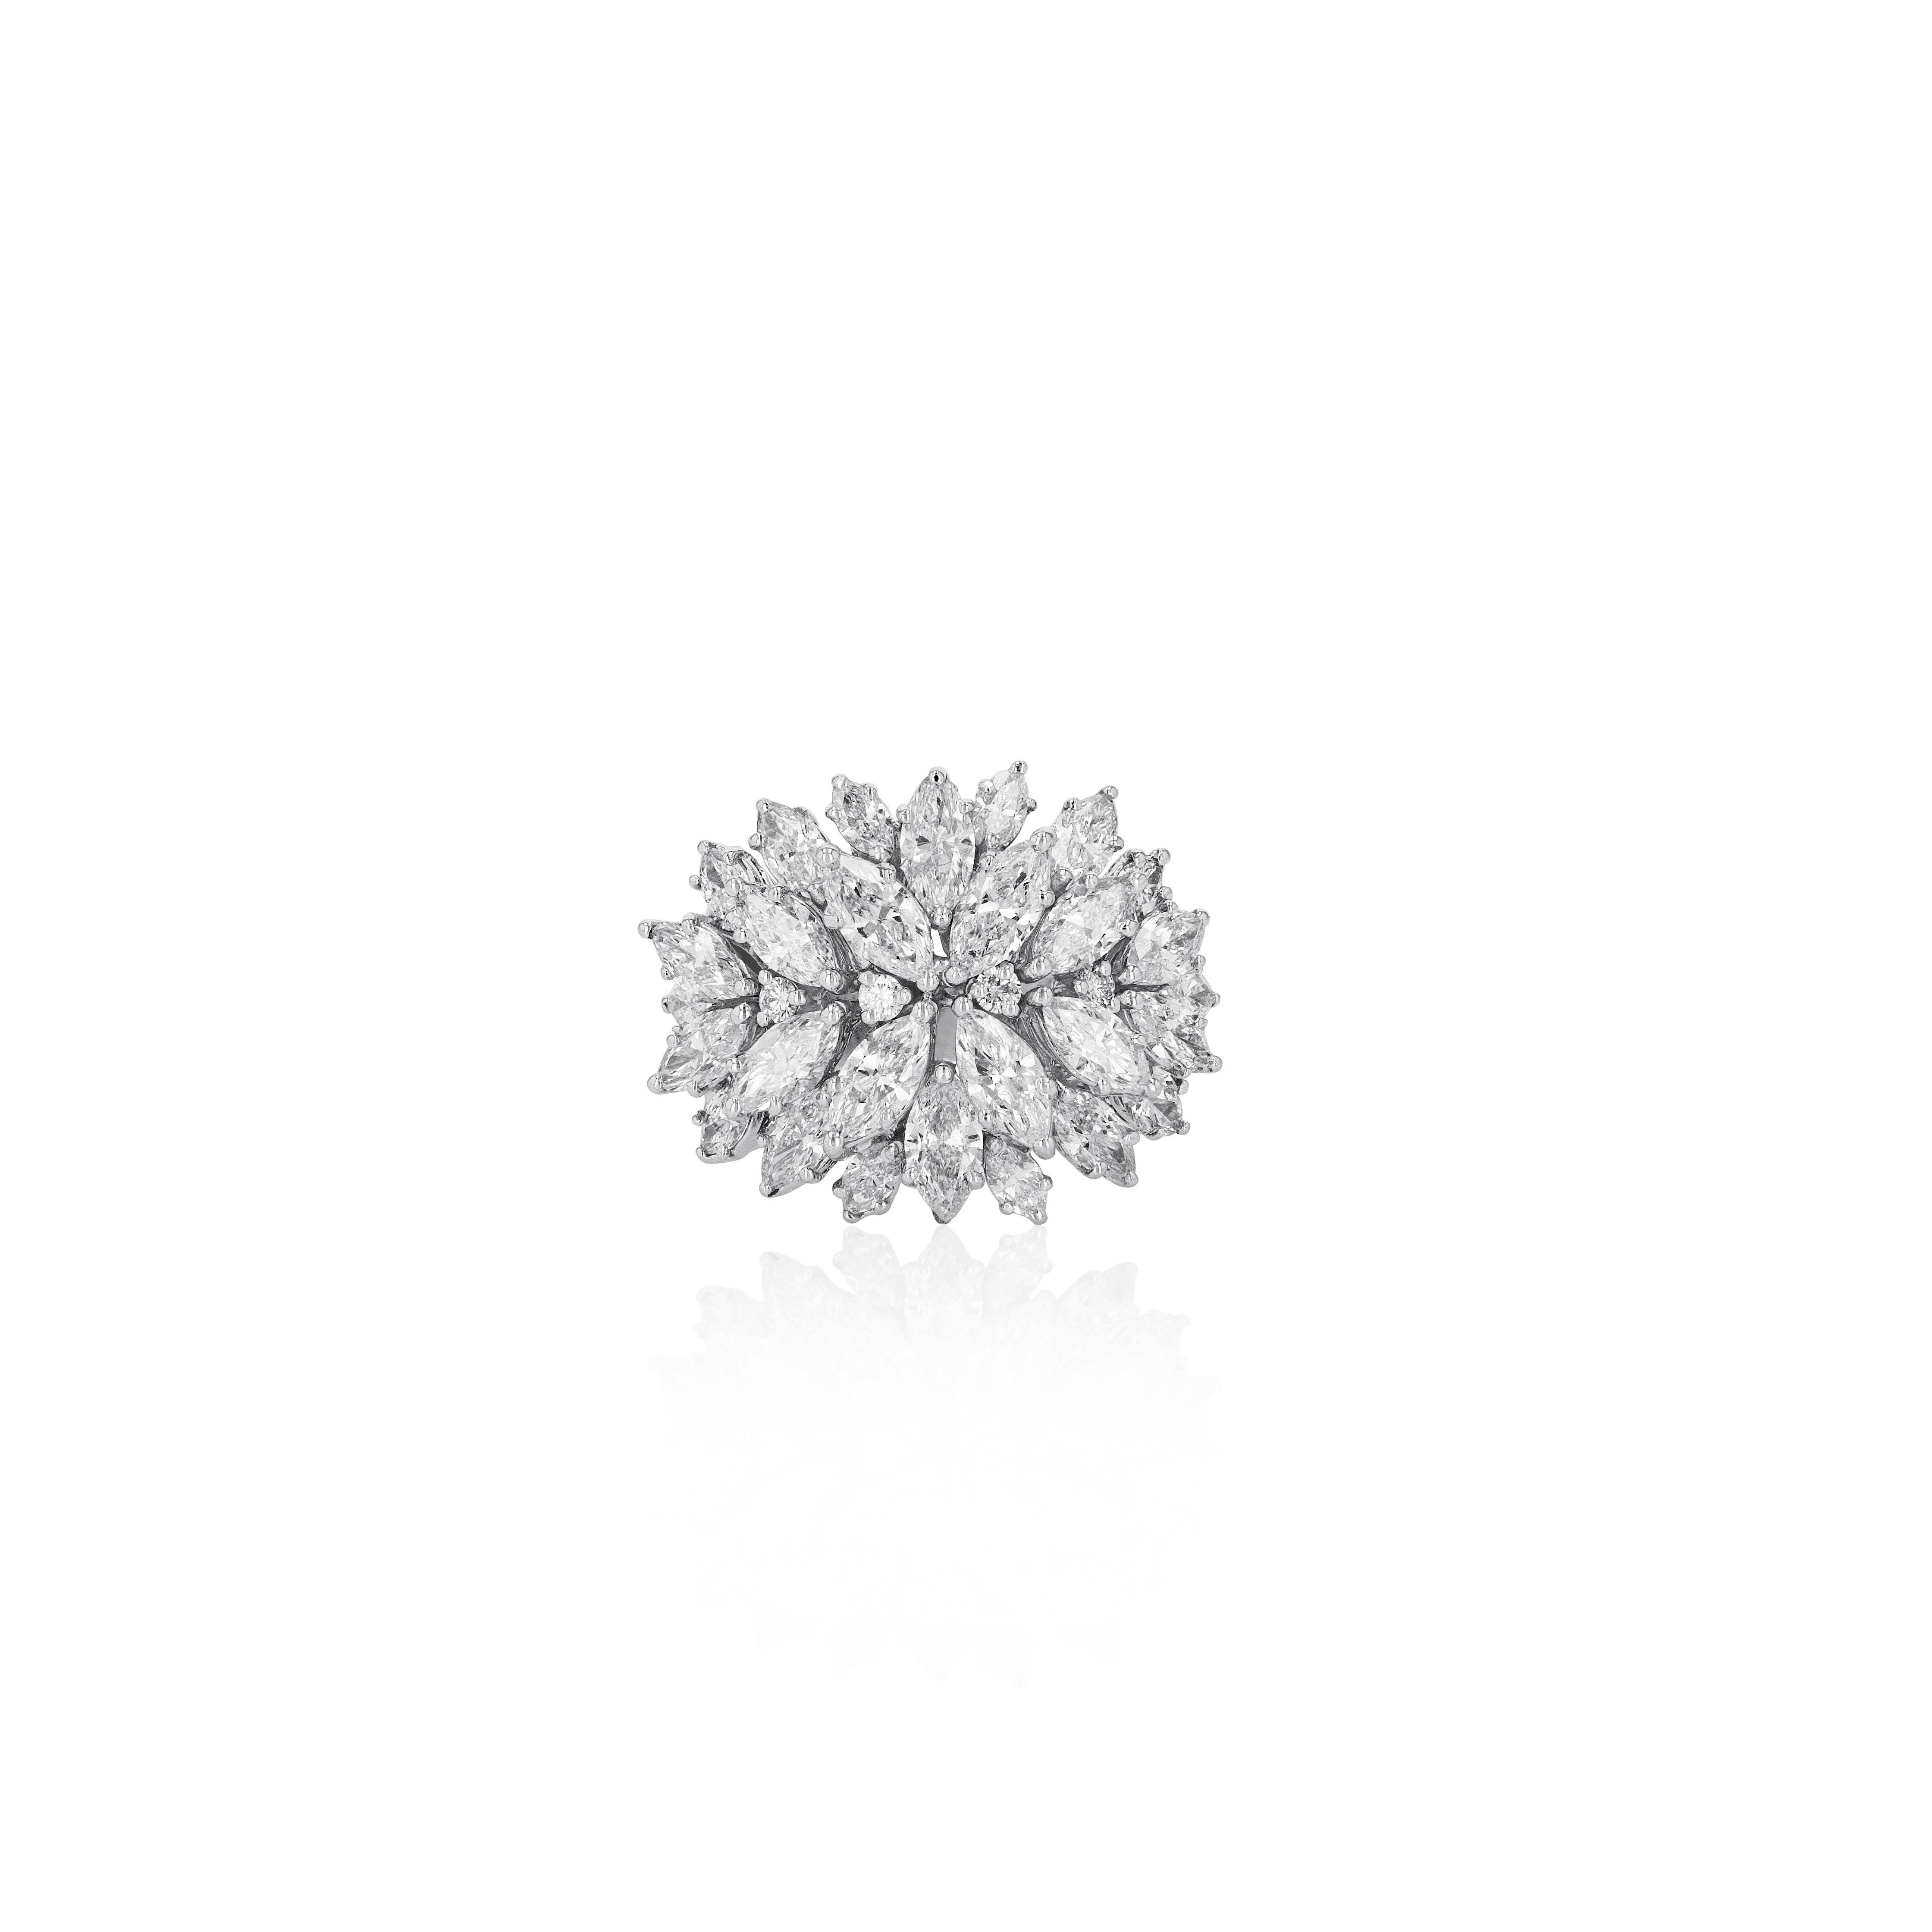 Romantic Amwaj Jewelry Diamond Ring in 18 Karat White Gold